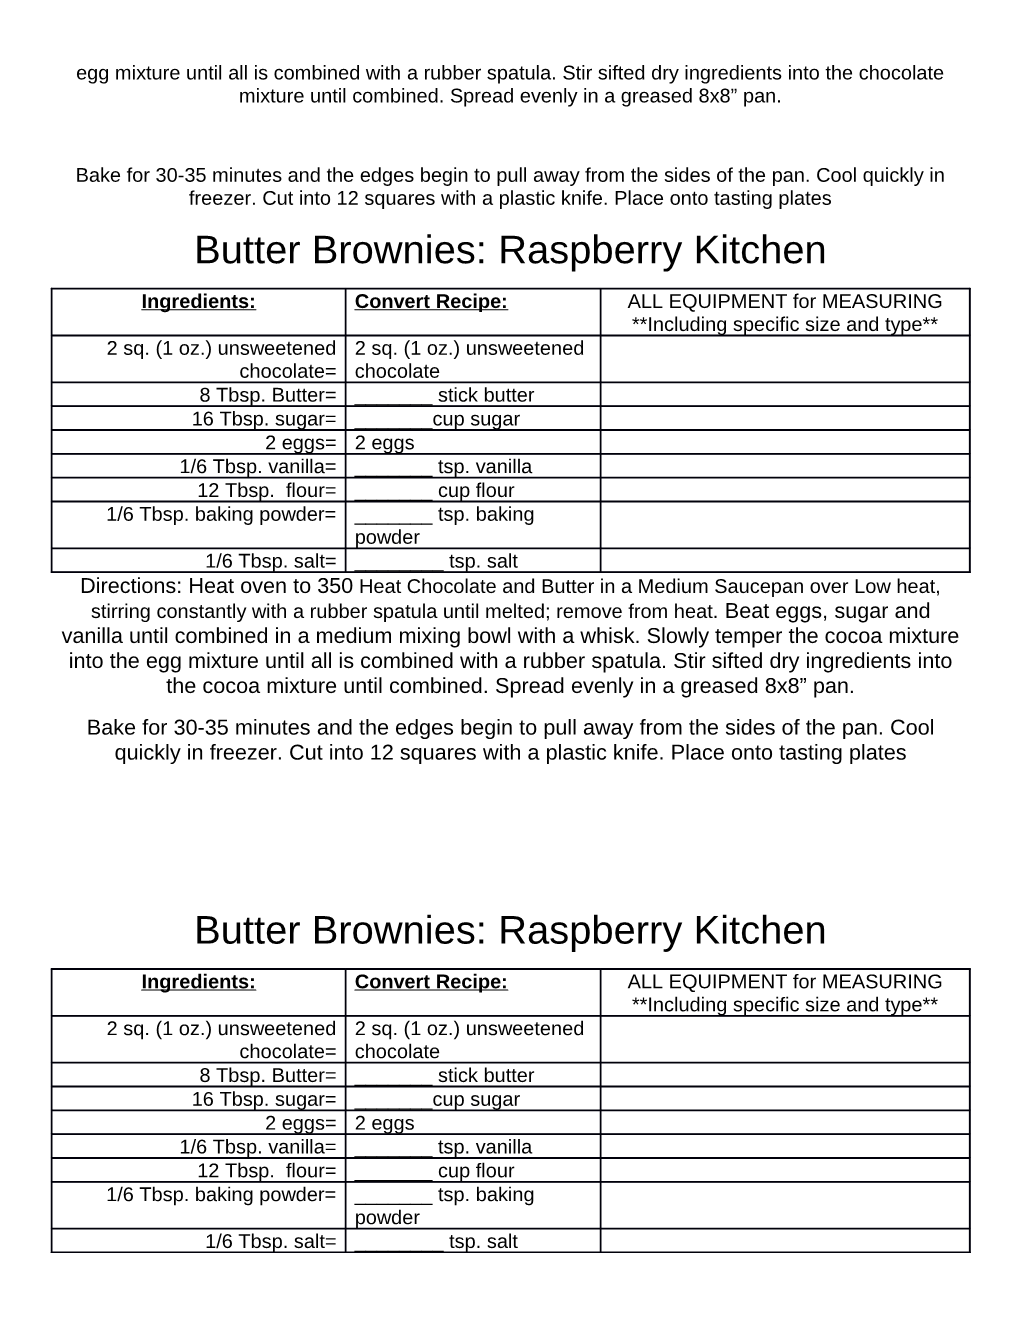 Standard Brownies: Grape Kitchen